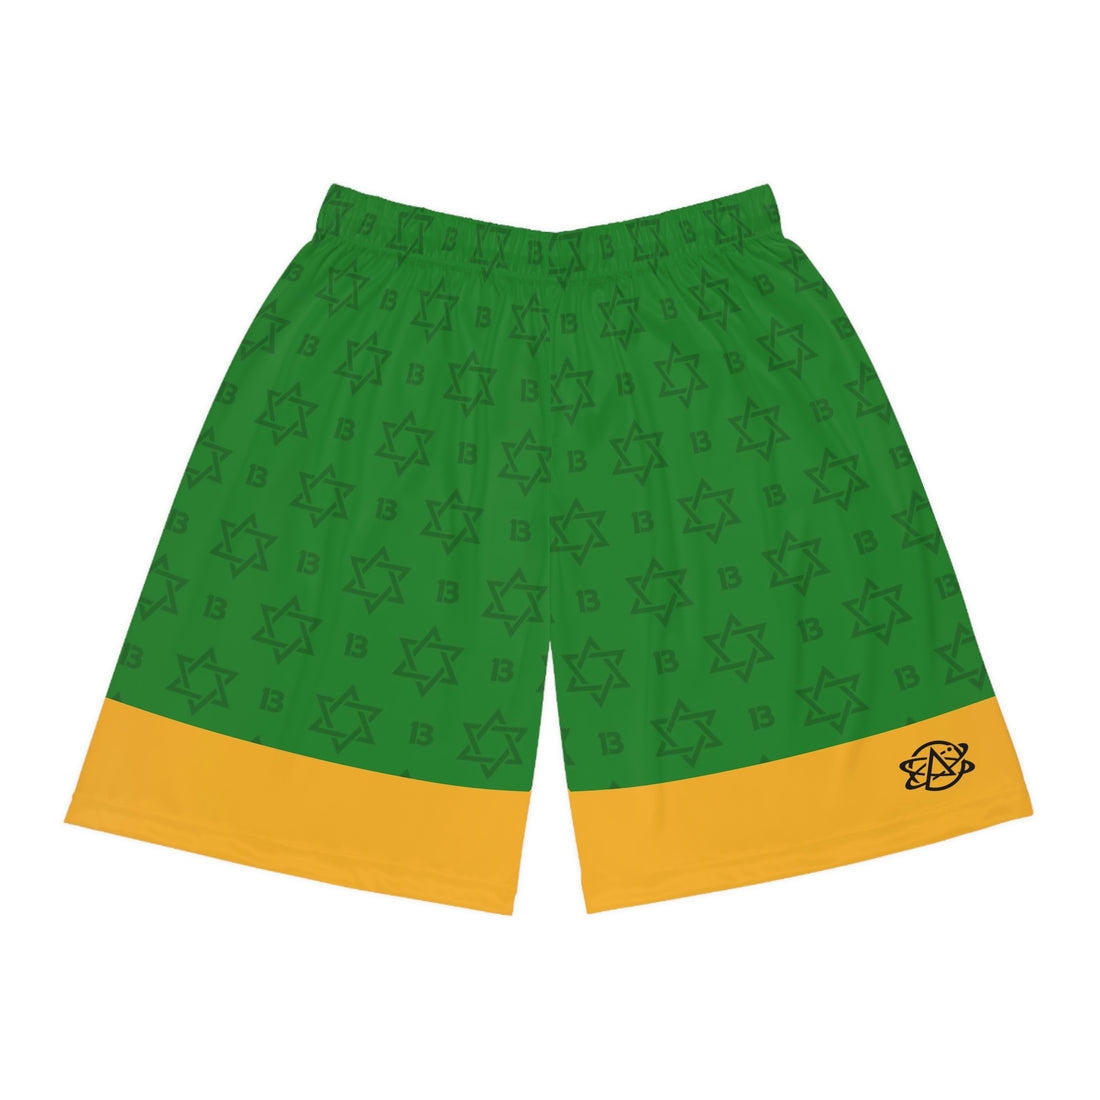 Father Yod's Team Green Shorts